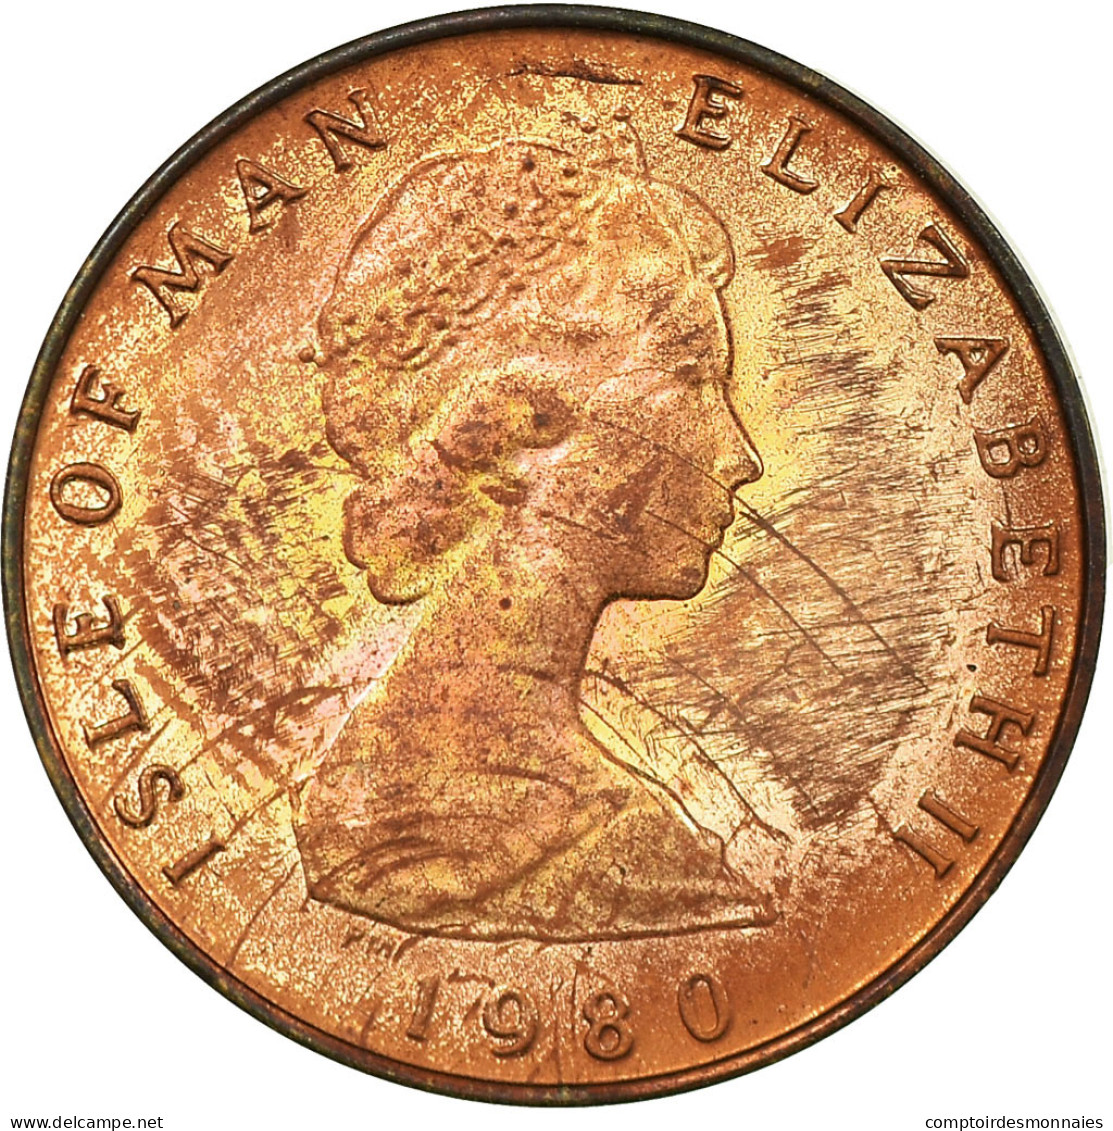 Monnaie, Isle Of Man, Elizabeth II, 1/2 Penny, 1980, TTB, Bronze, KM:58 - Isle Of Man